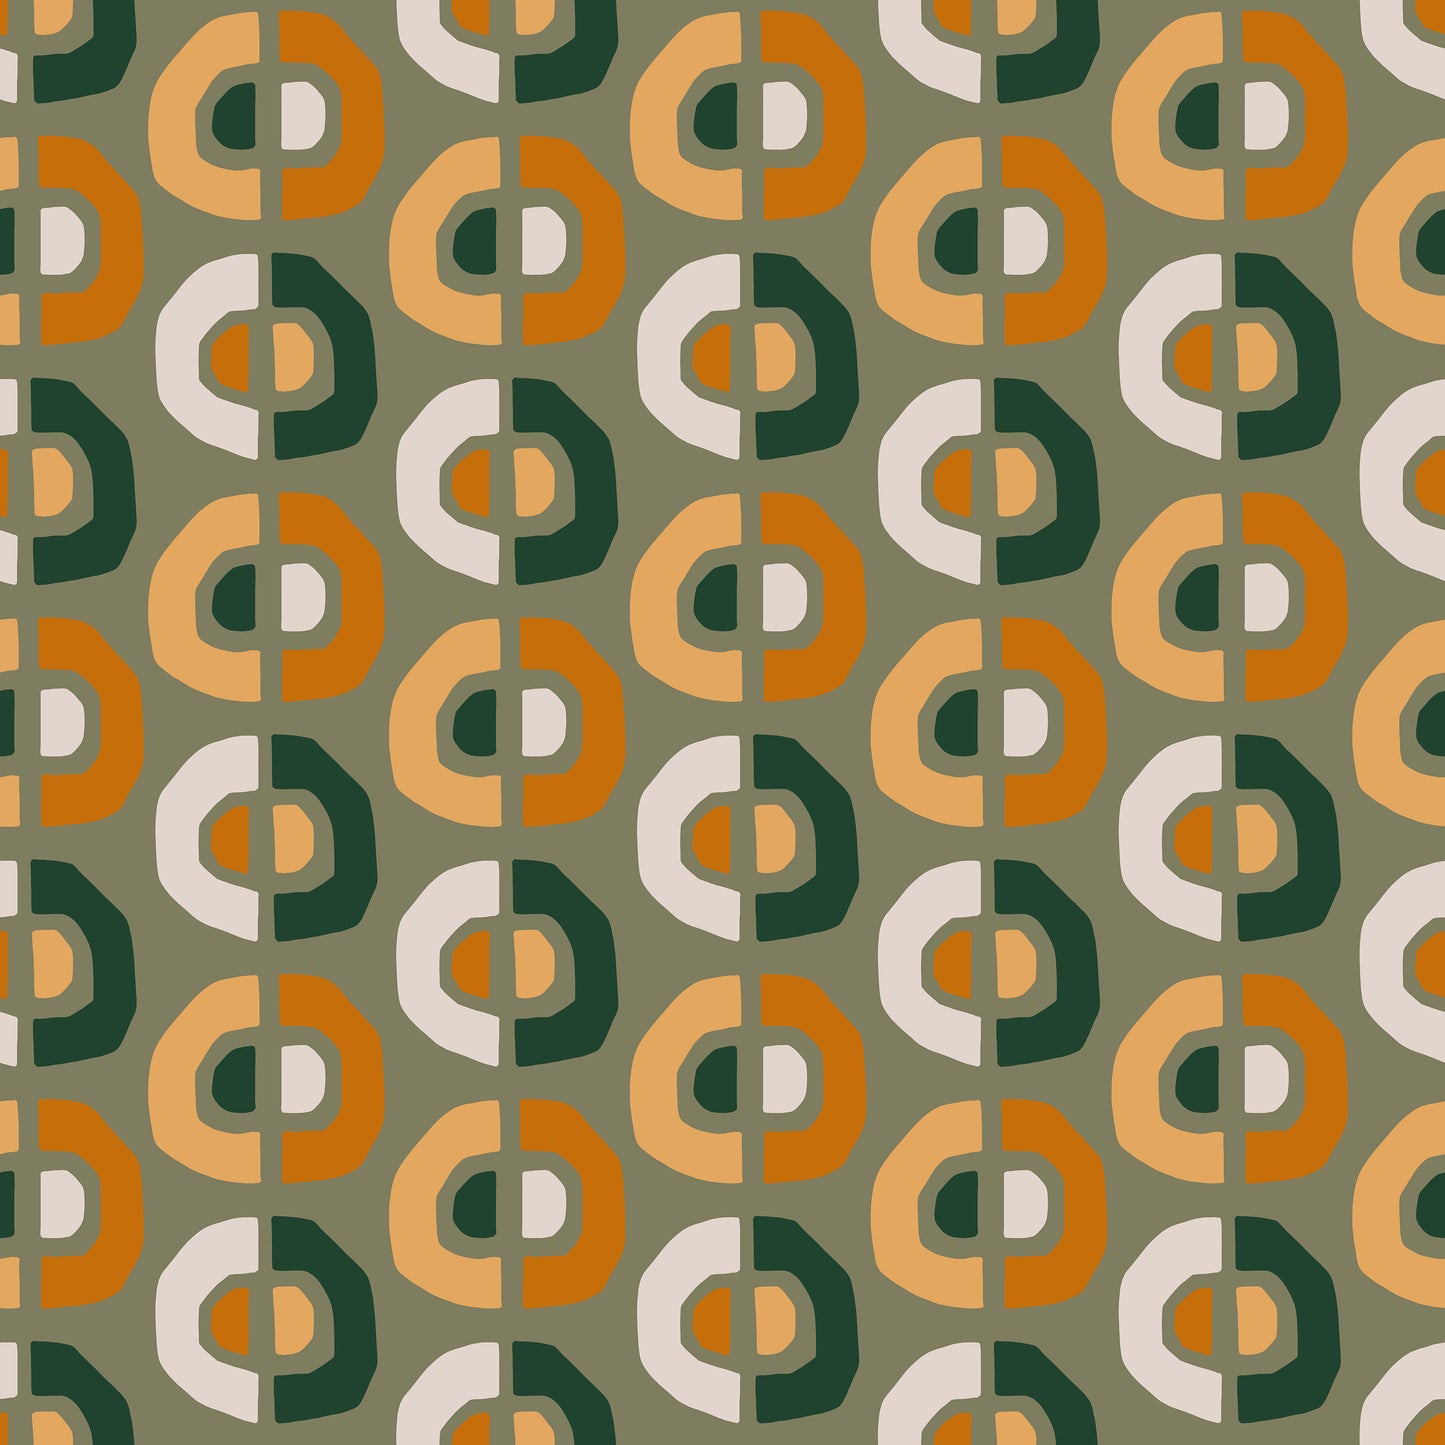 Geometric Orange & Green Semi Circles Self Adhesive Vinyl